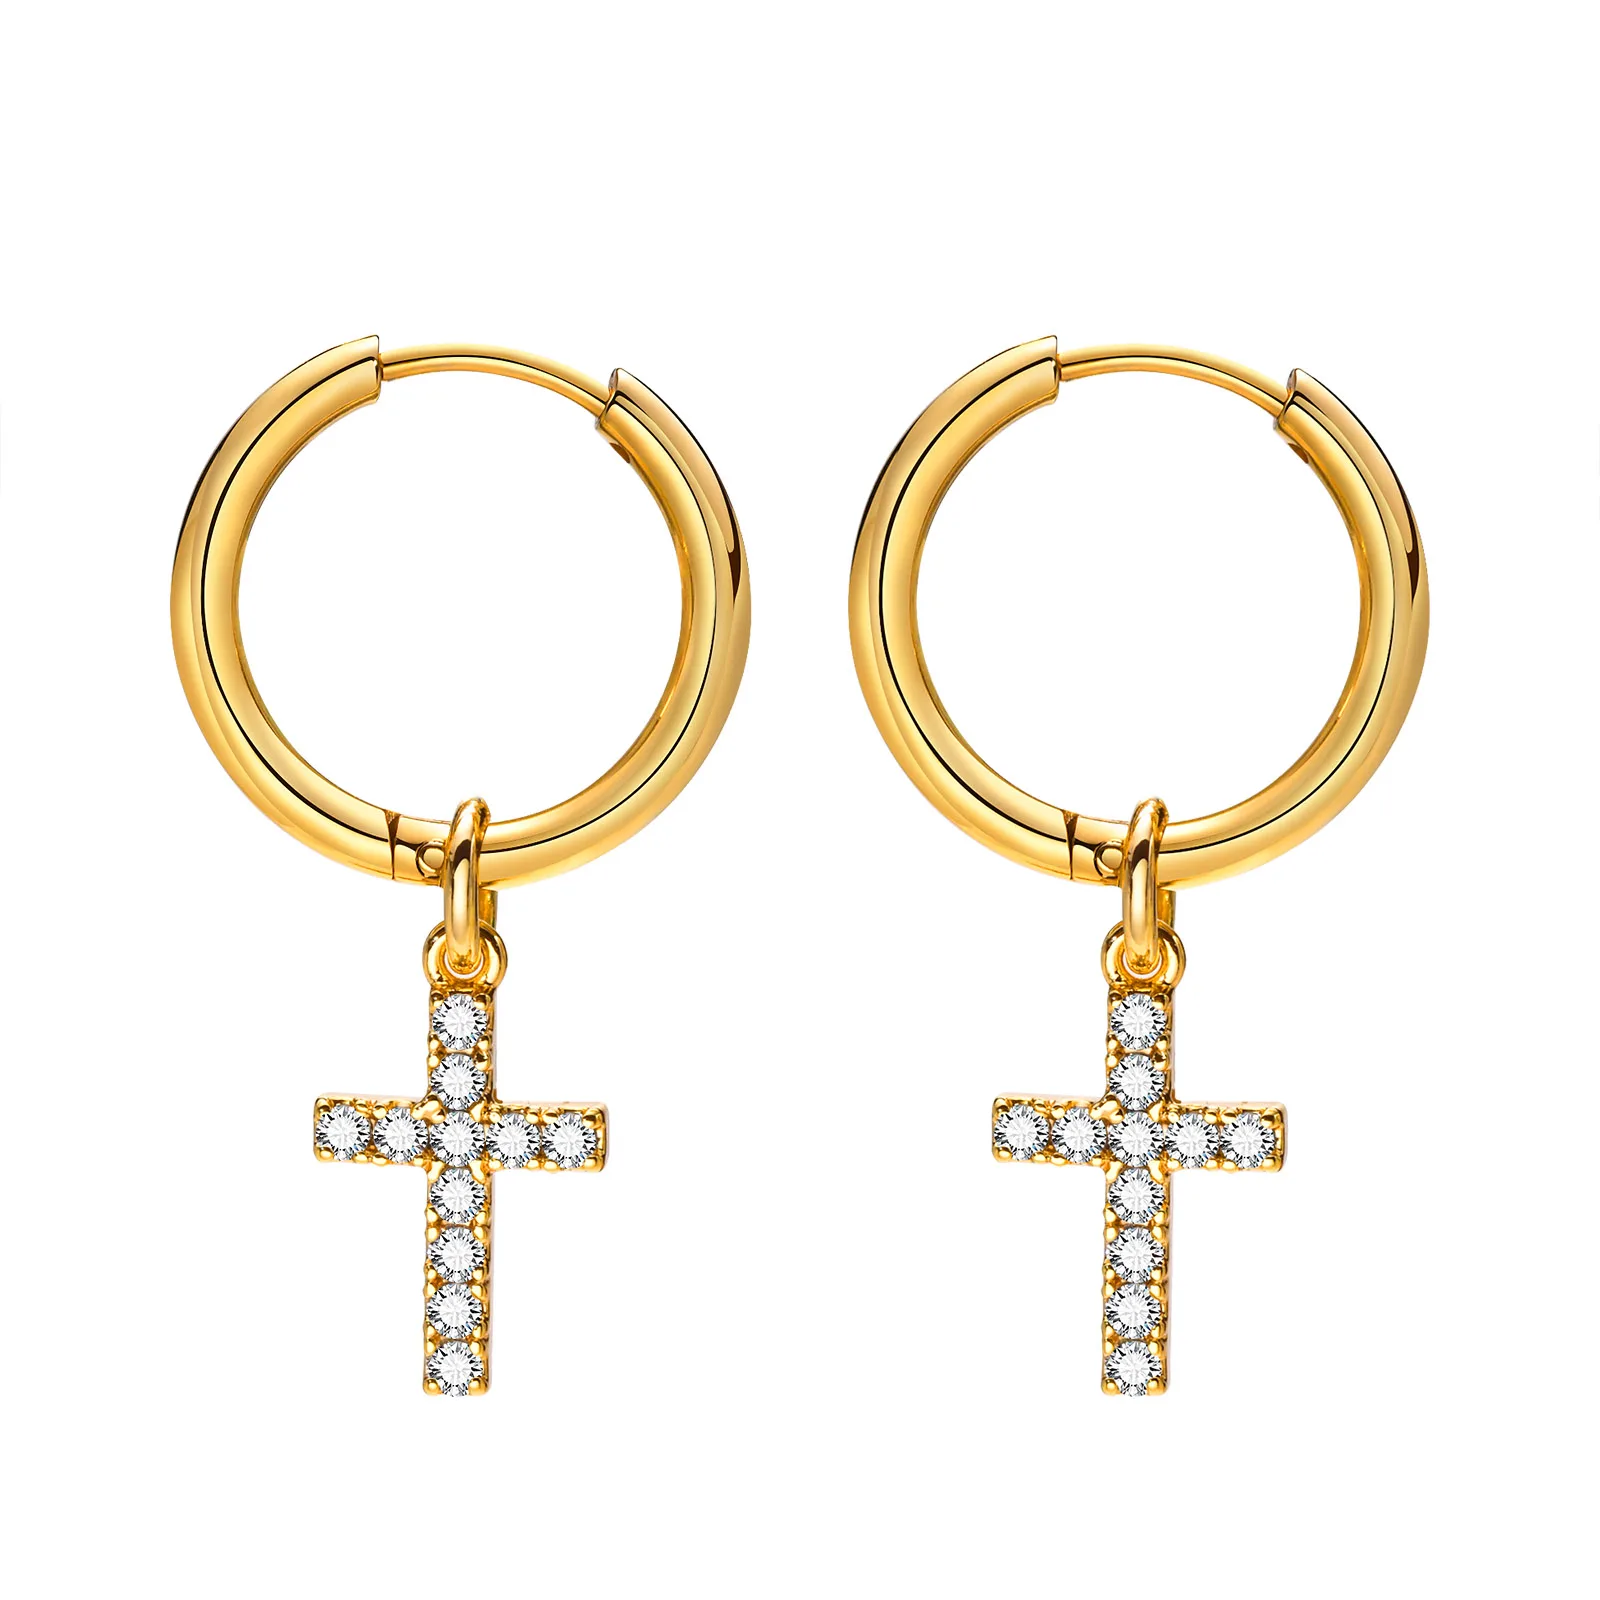 Gold Cross Dangle Earrings for Men - Gold Filled Jewelry - Nadin Art Design  - Personalized Jewelry